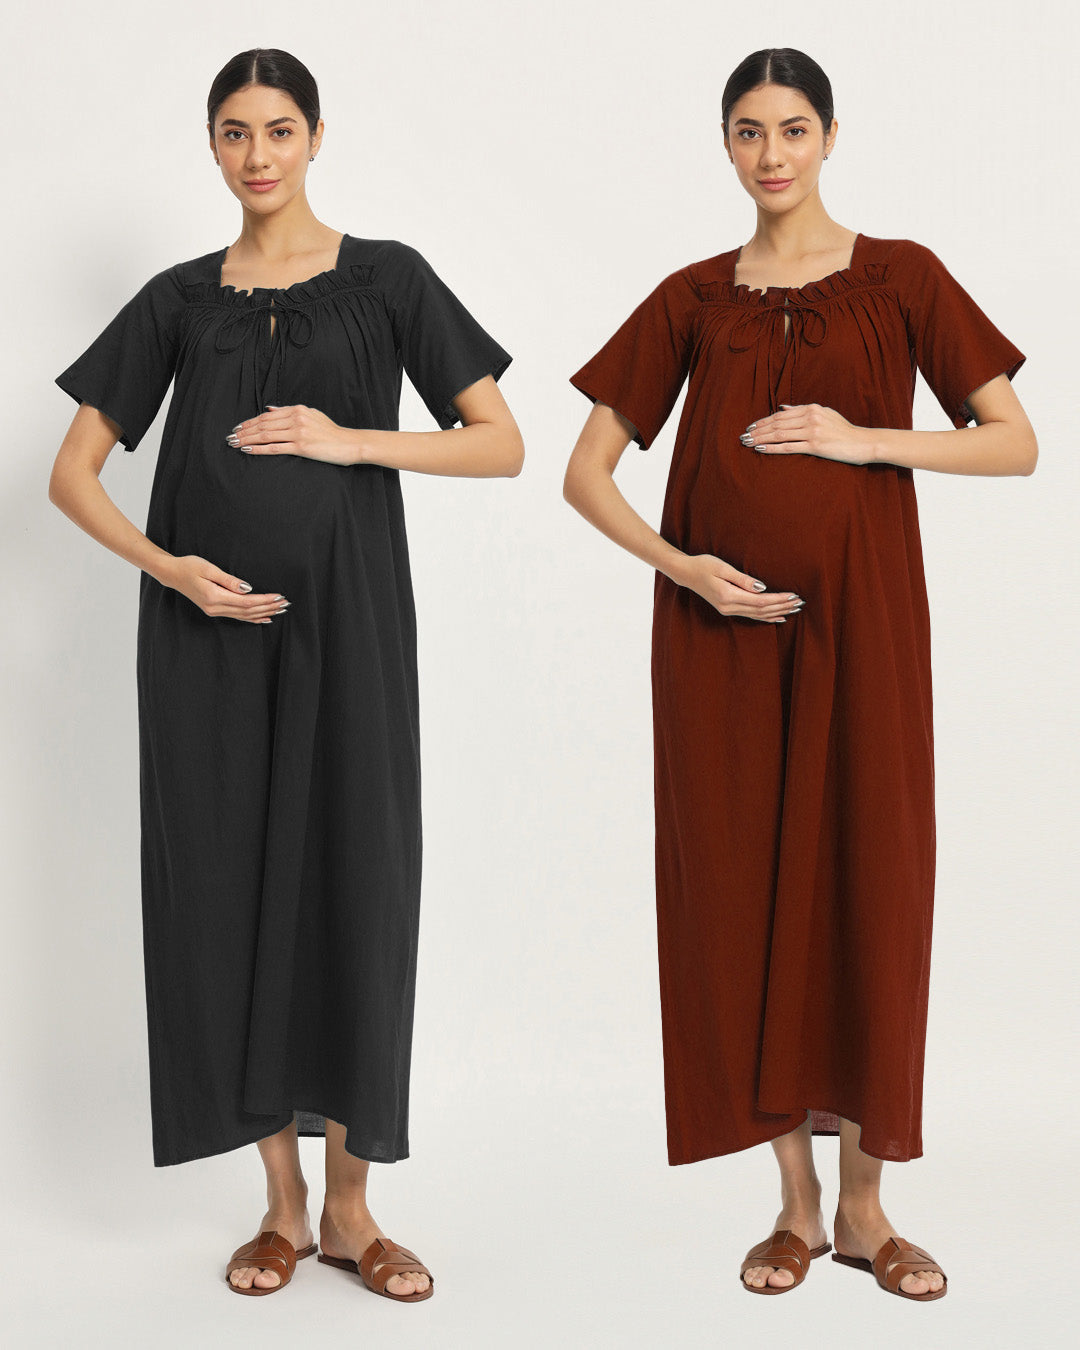 Combo: Black & Russet Red Nurture N' Shine Maternity & Nursing Dress